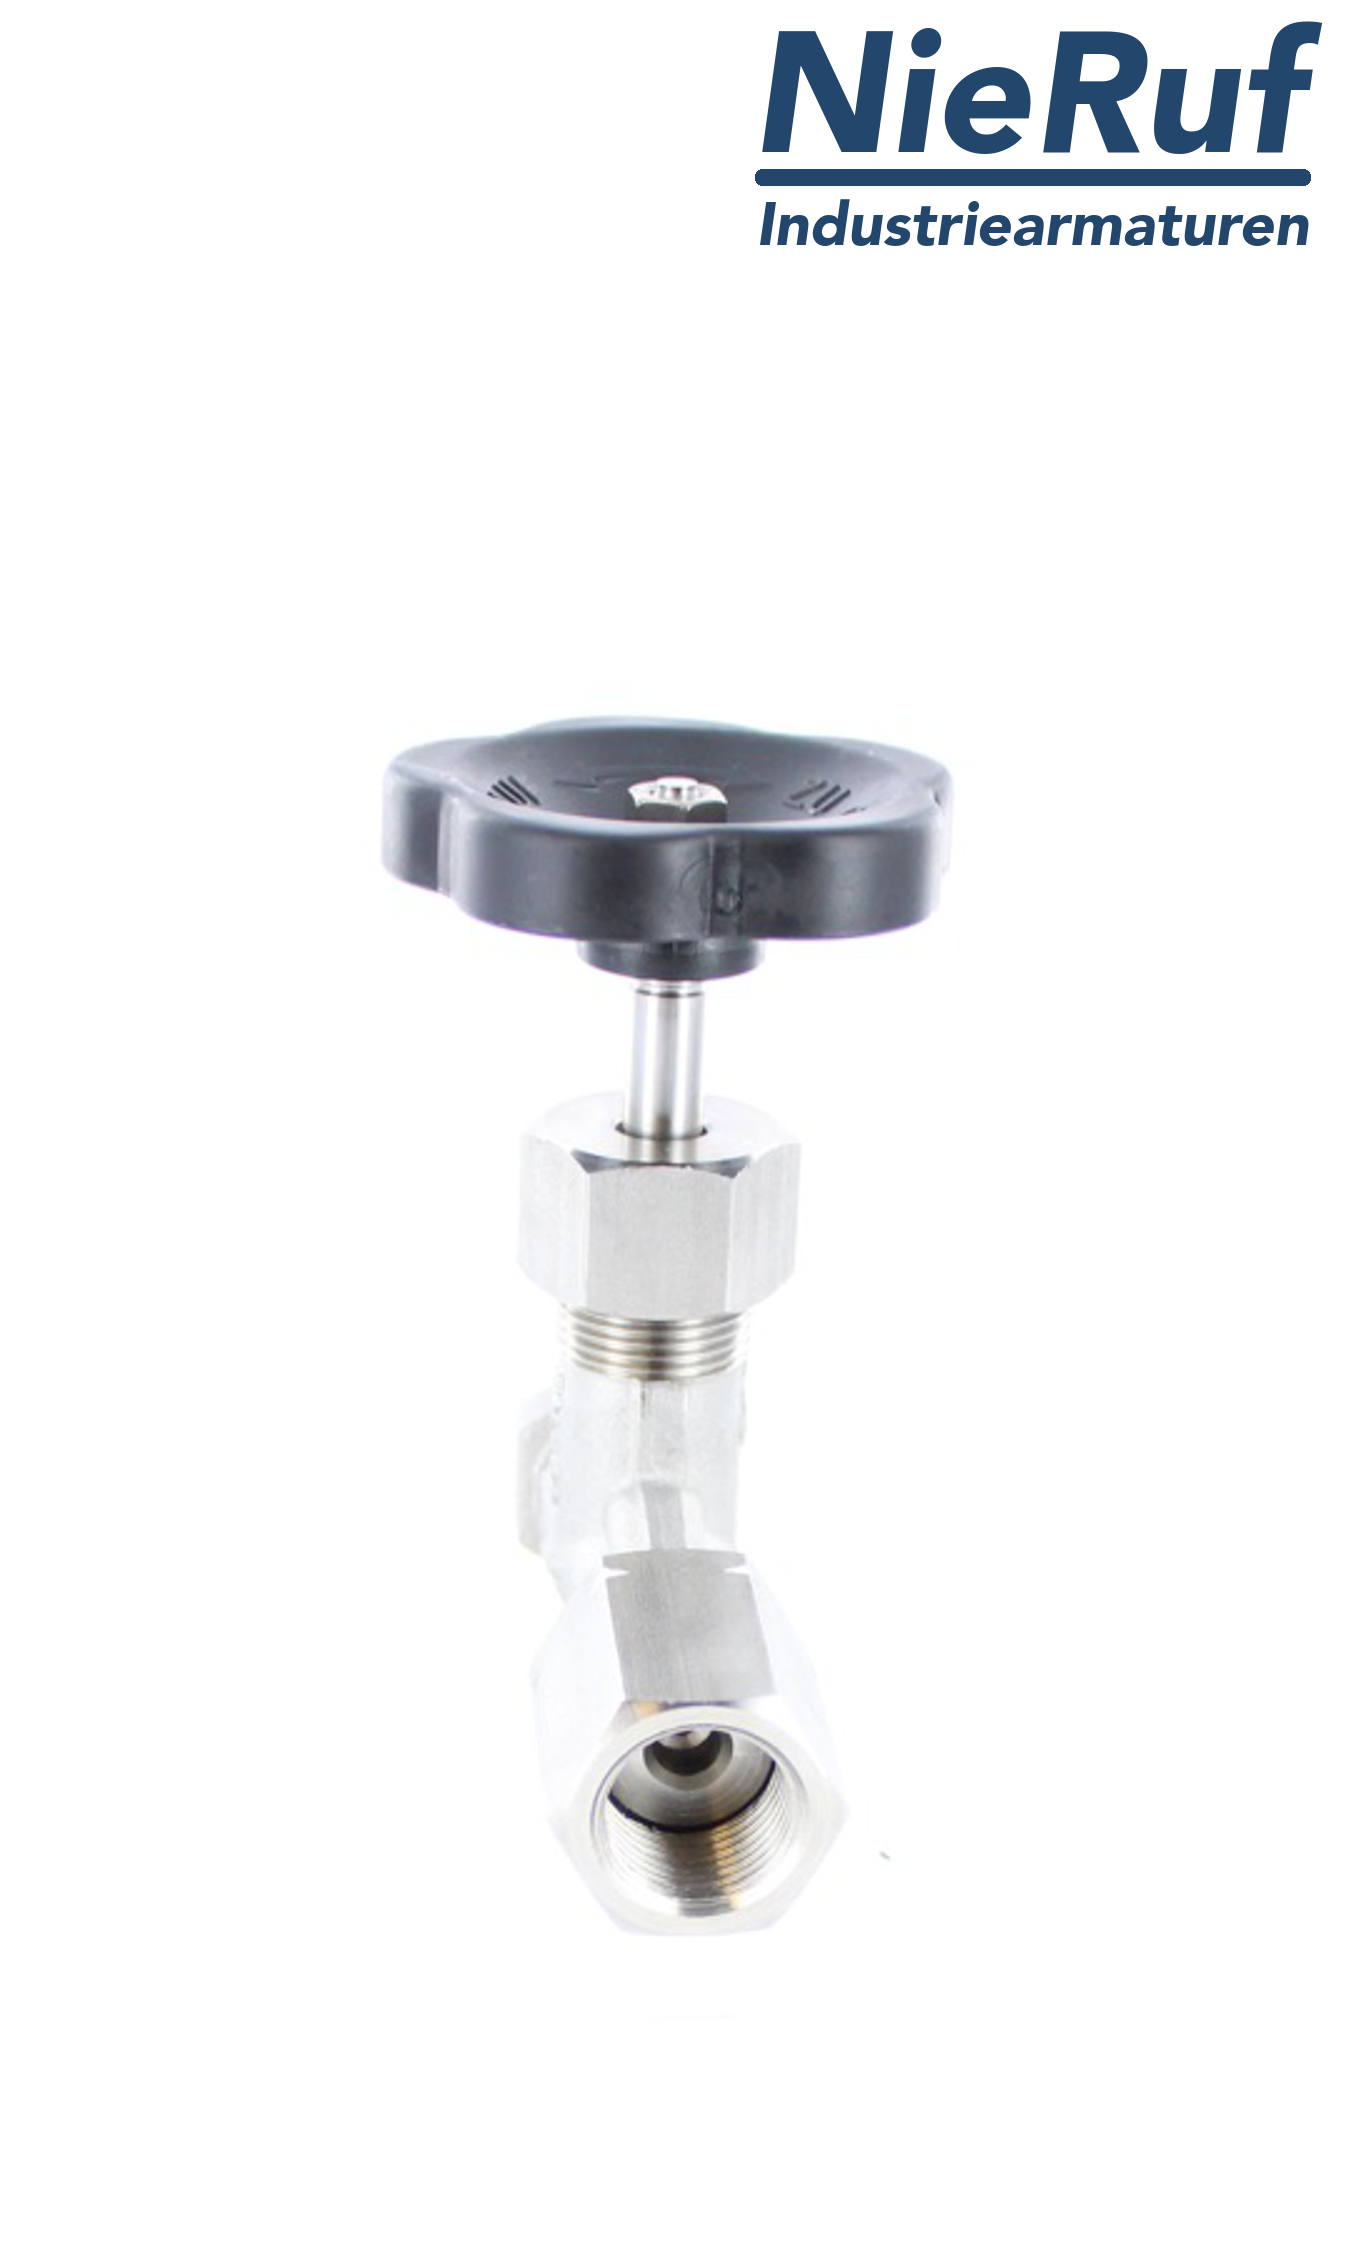 manometer gauge valves sleeve x sleeve DIN 16270 stainless steel 1.4571 400 bar